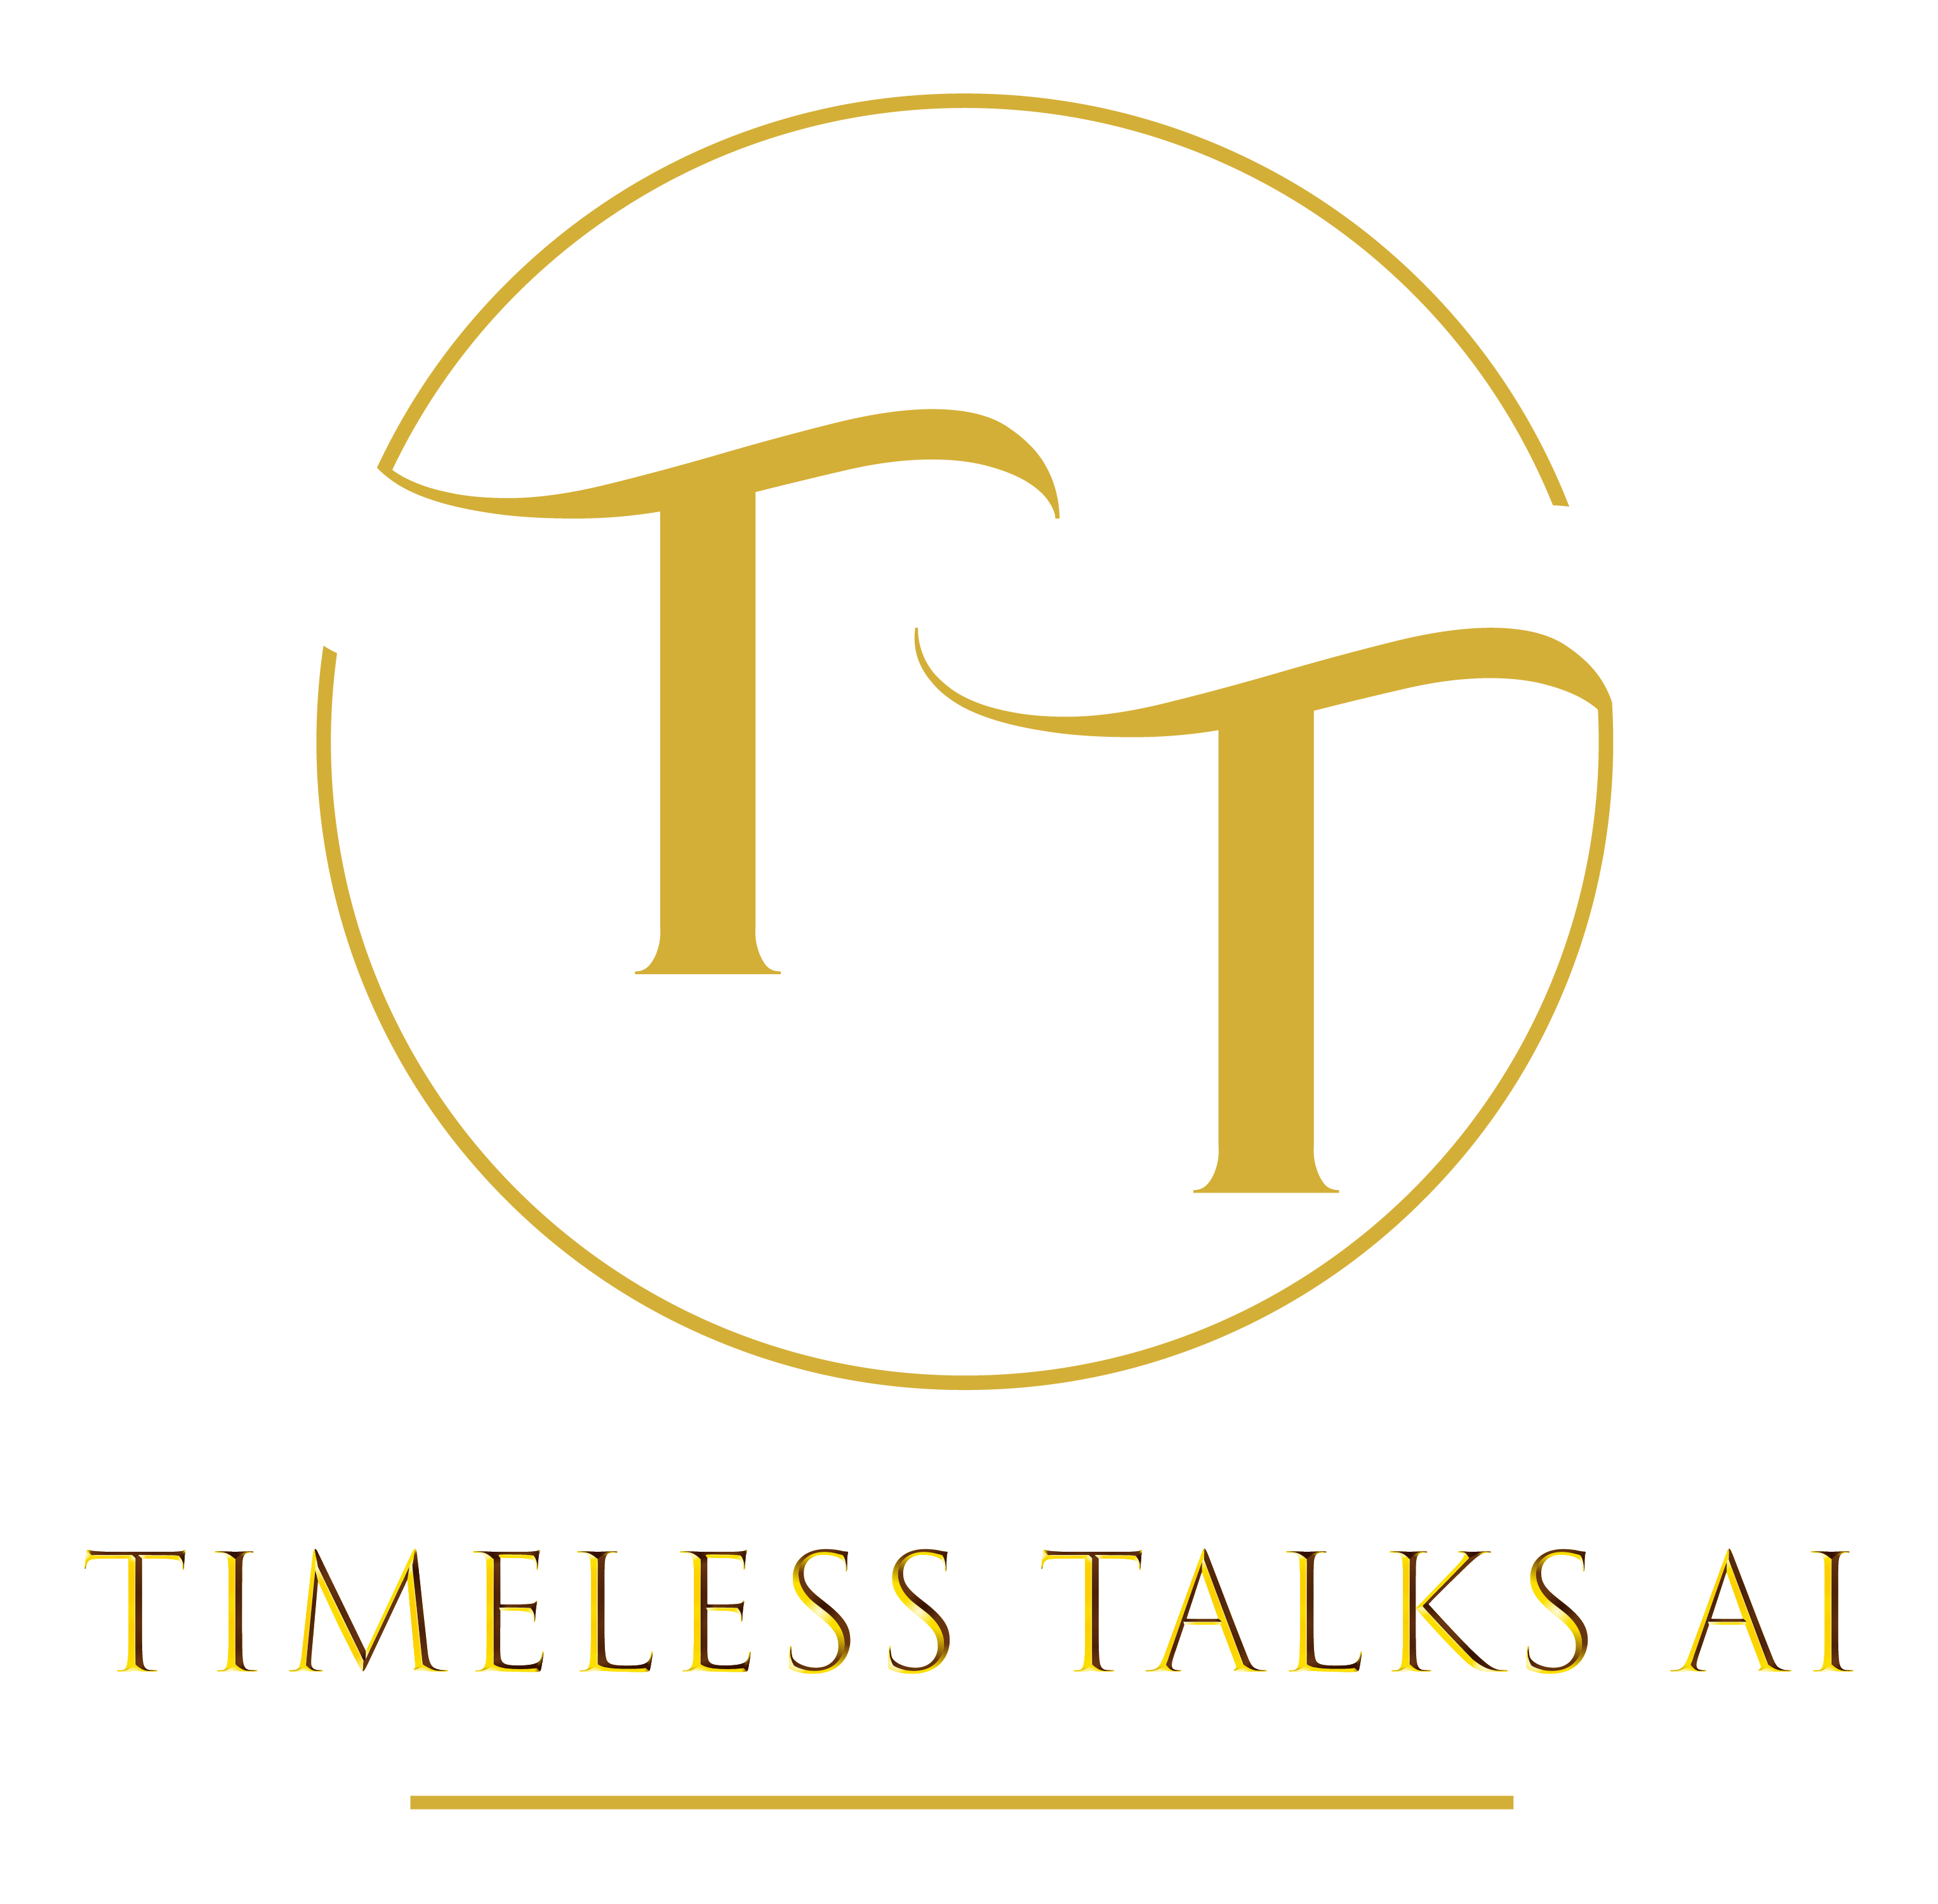  Timeless Talks Ai